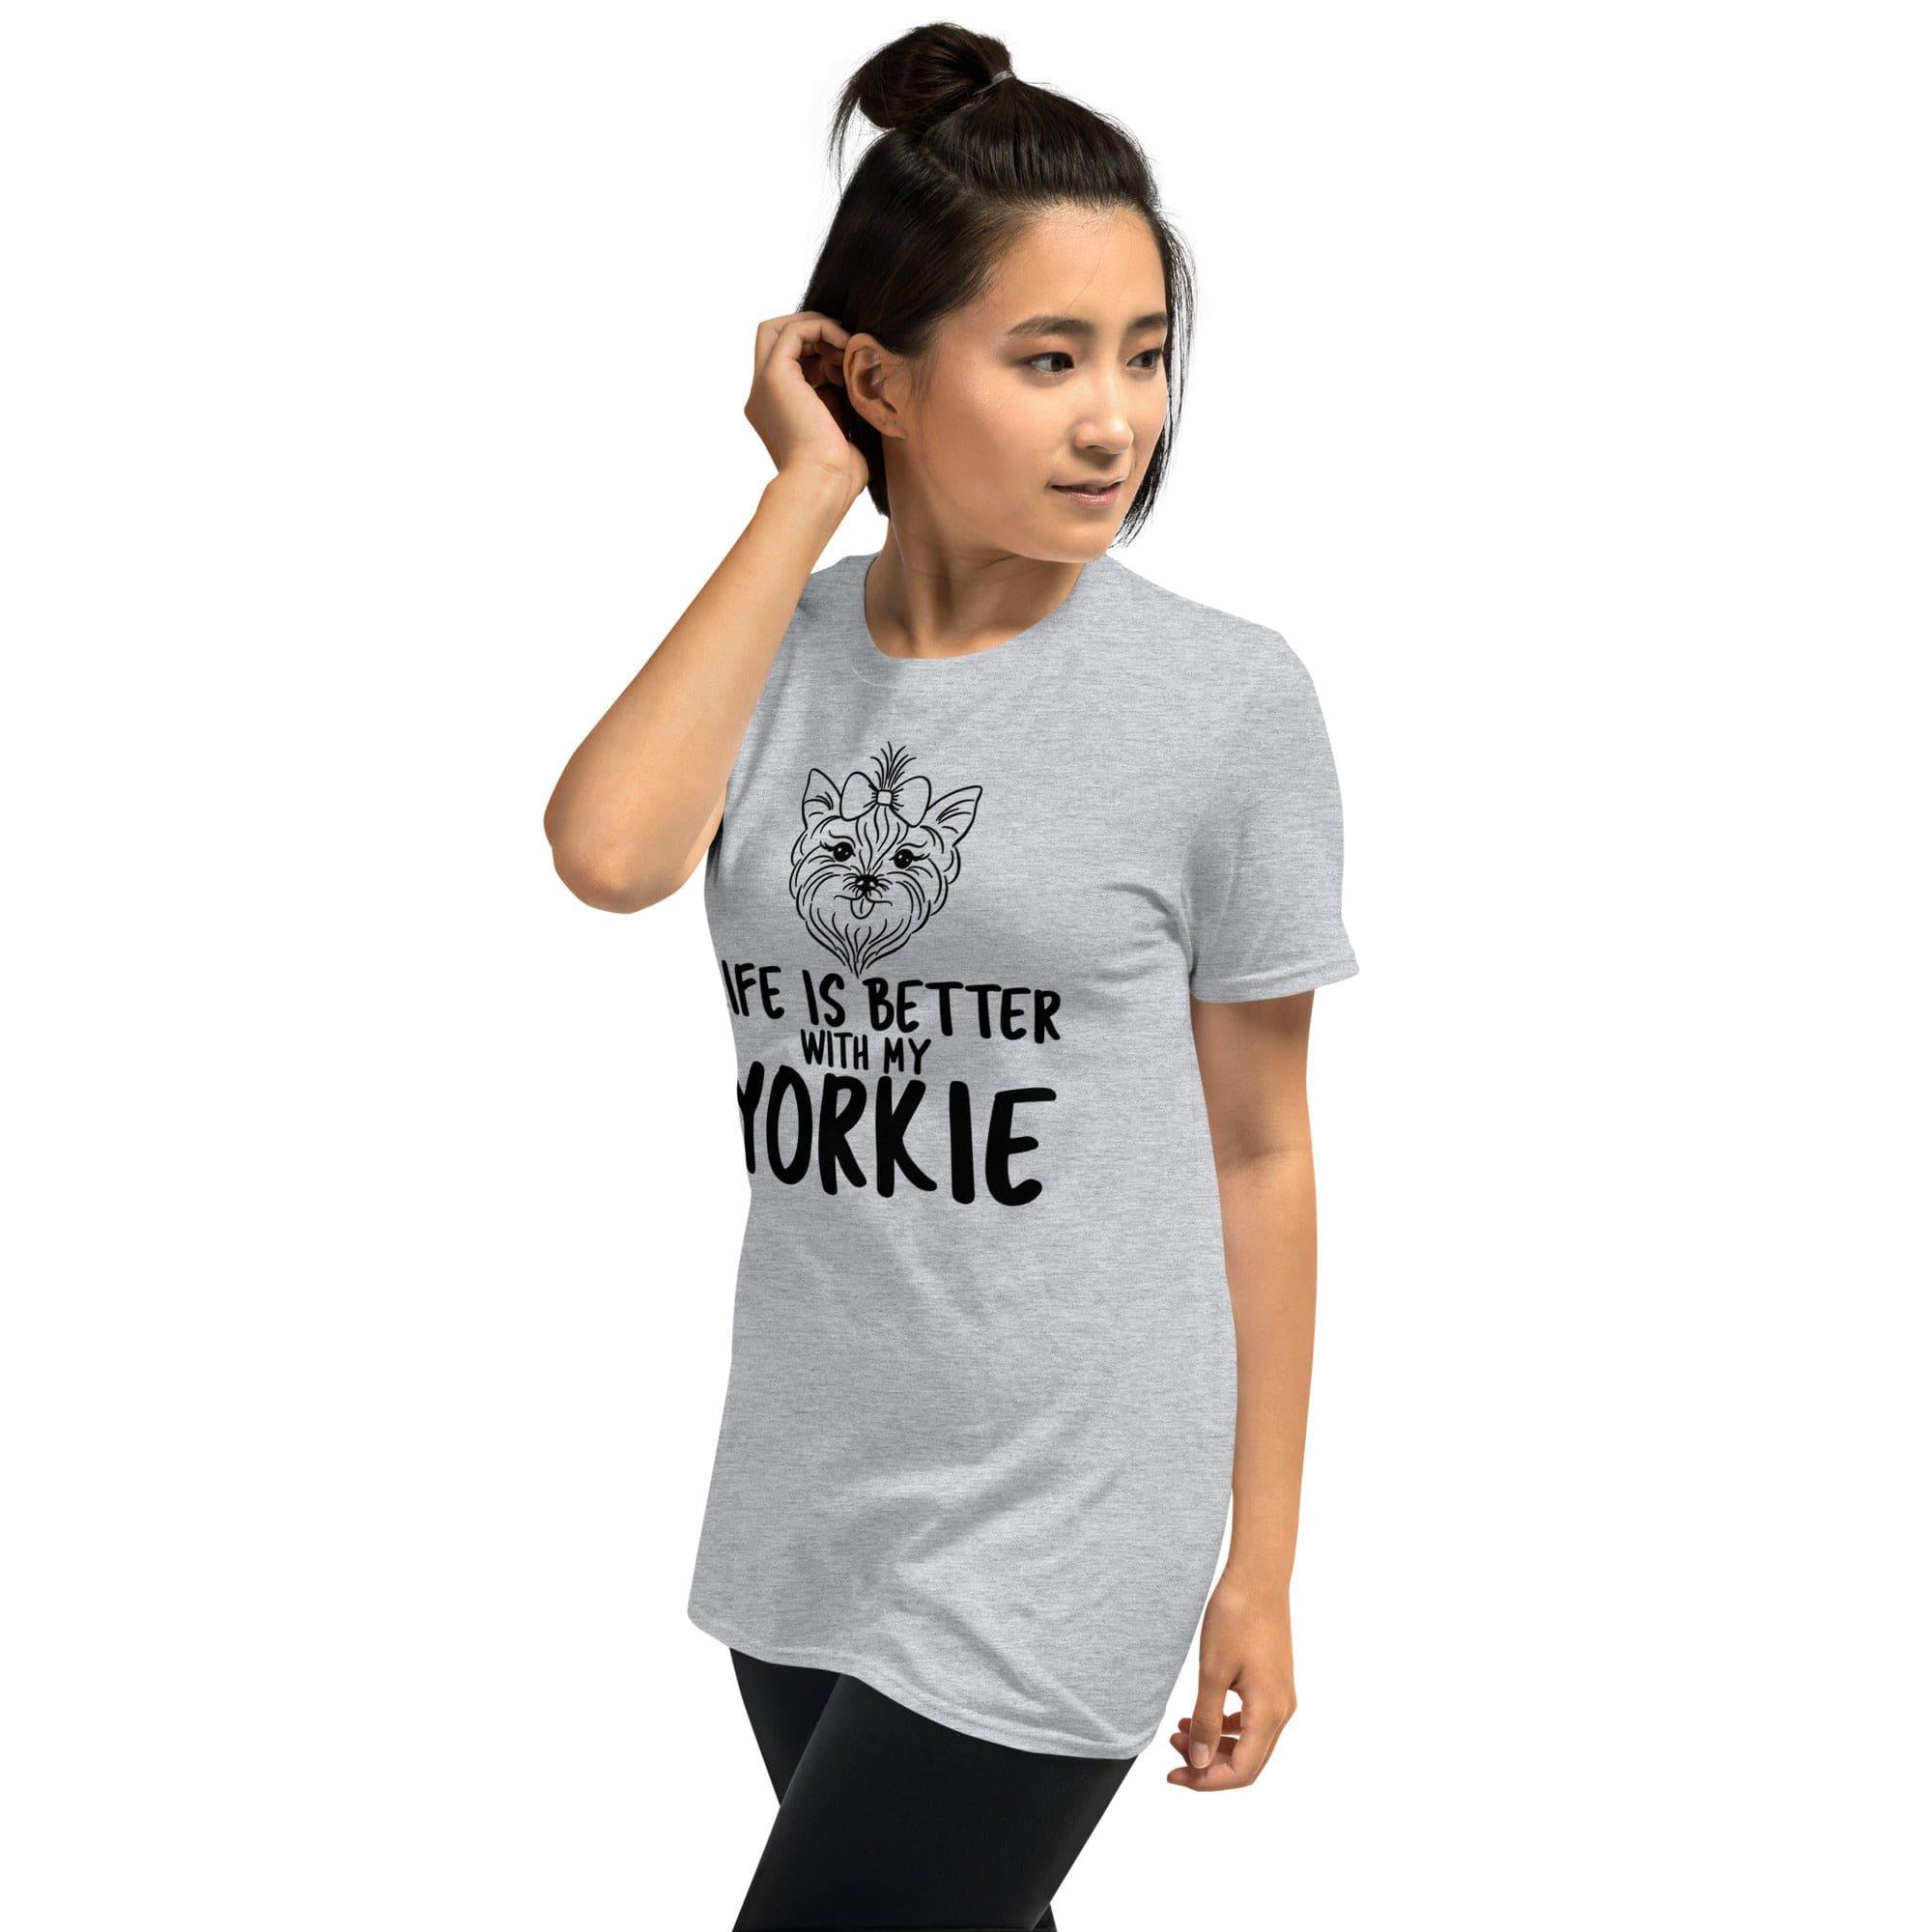 Yorkie T-Shirt Life is Better with my Yorkie Short-Sleeve Unisex Top - TopKoalaTee